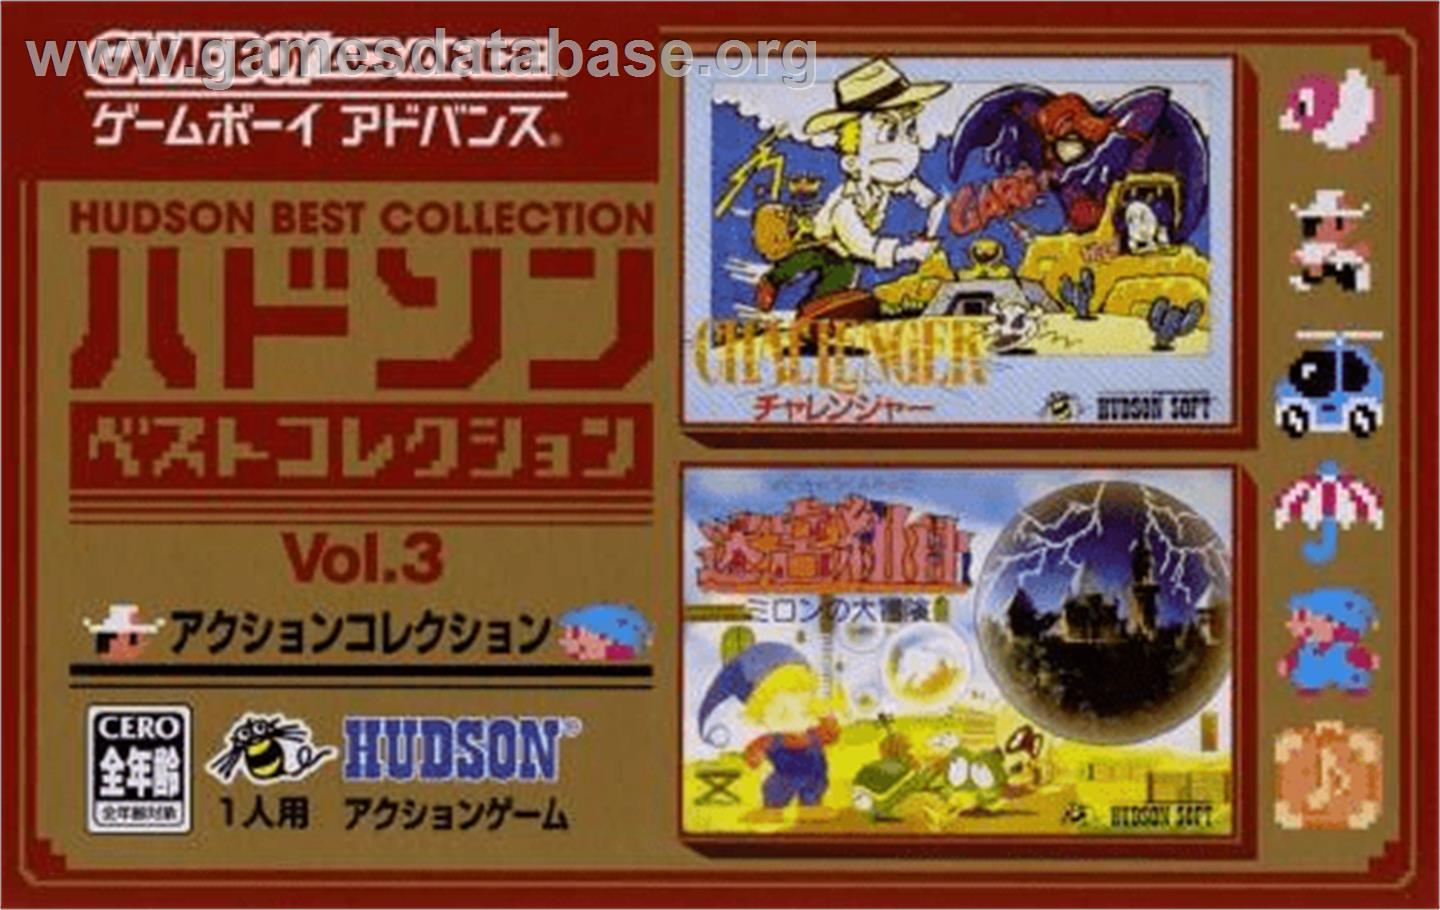 Hudson Best Collection Vol. 3: Action Collection - Nintendo Game Boy Advance - Artwork - Box